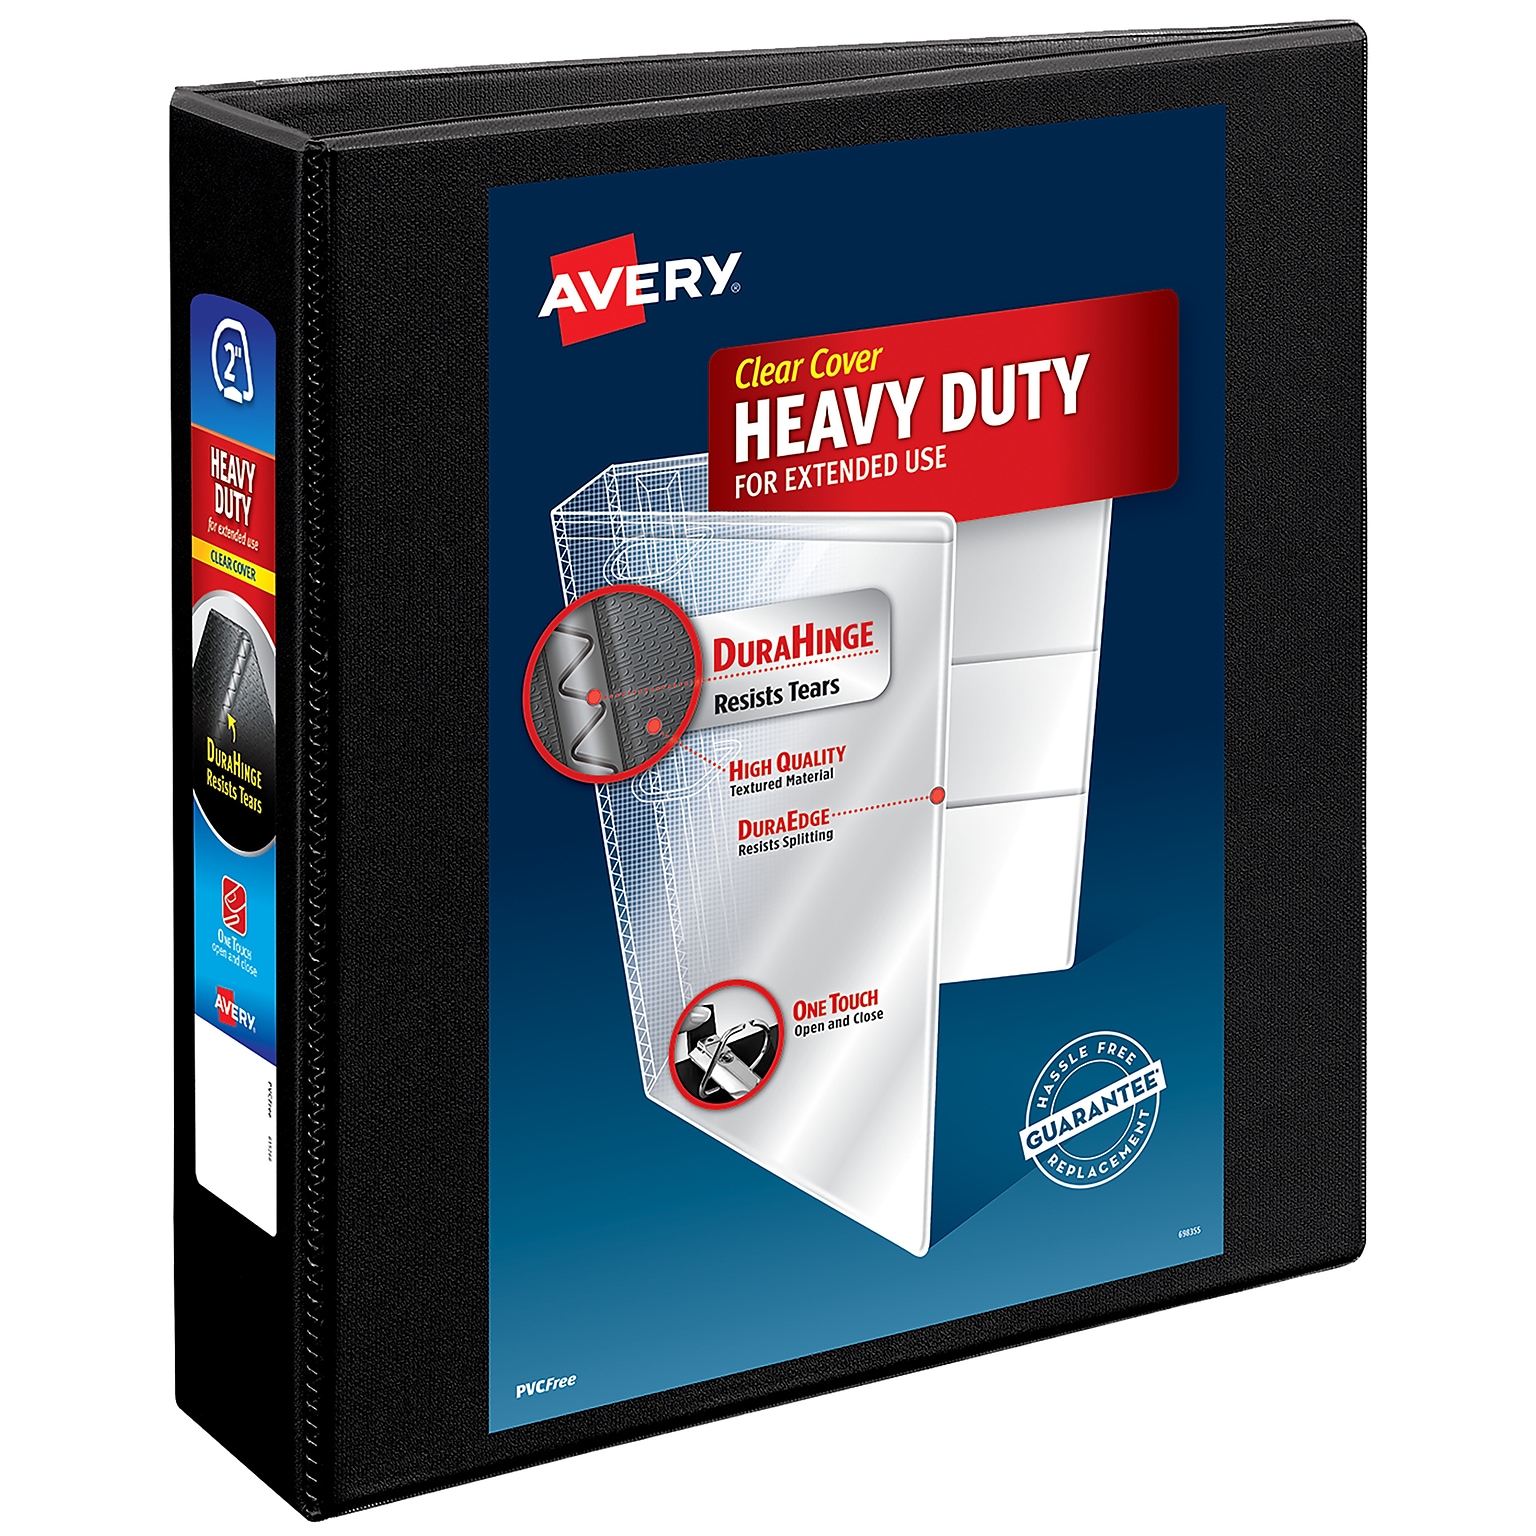 Avery Heavy Duty 2 3-Ring View Binders, Slant Ring, Black (5500)